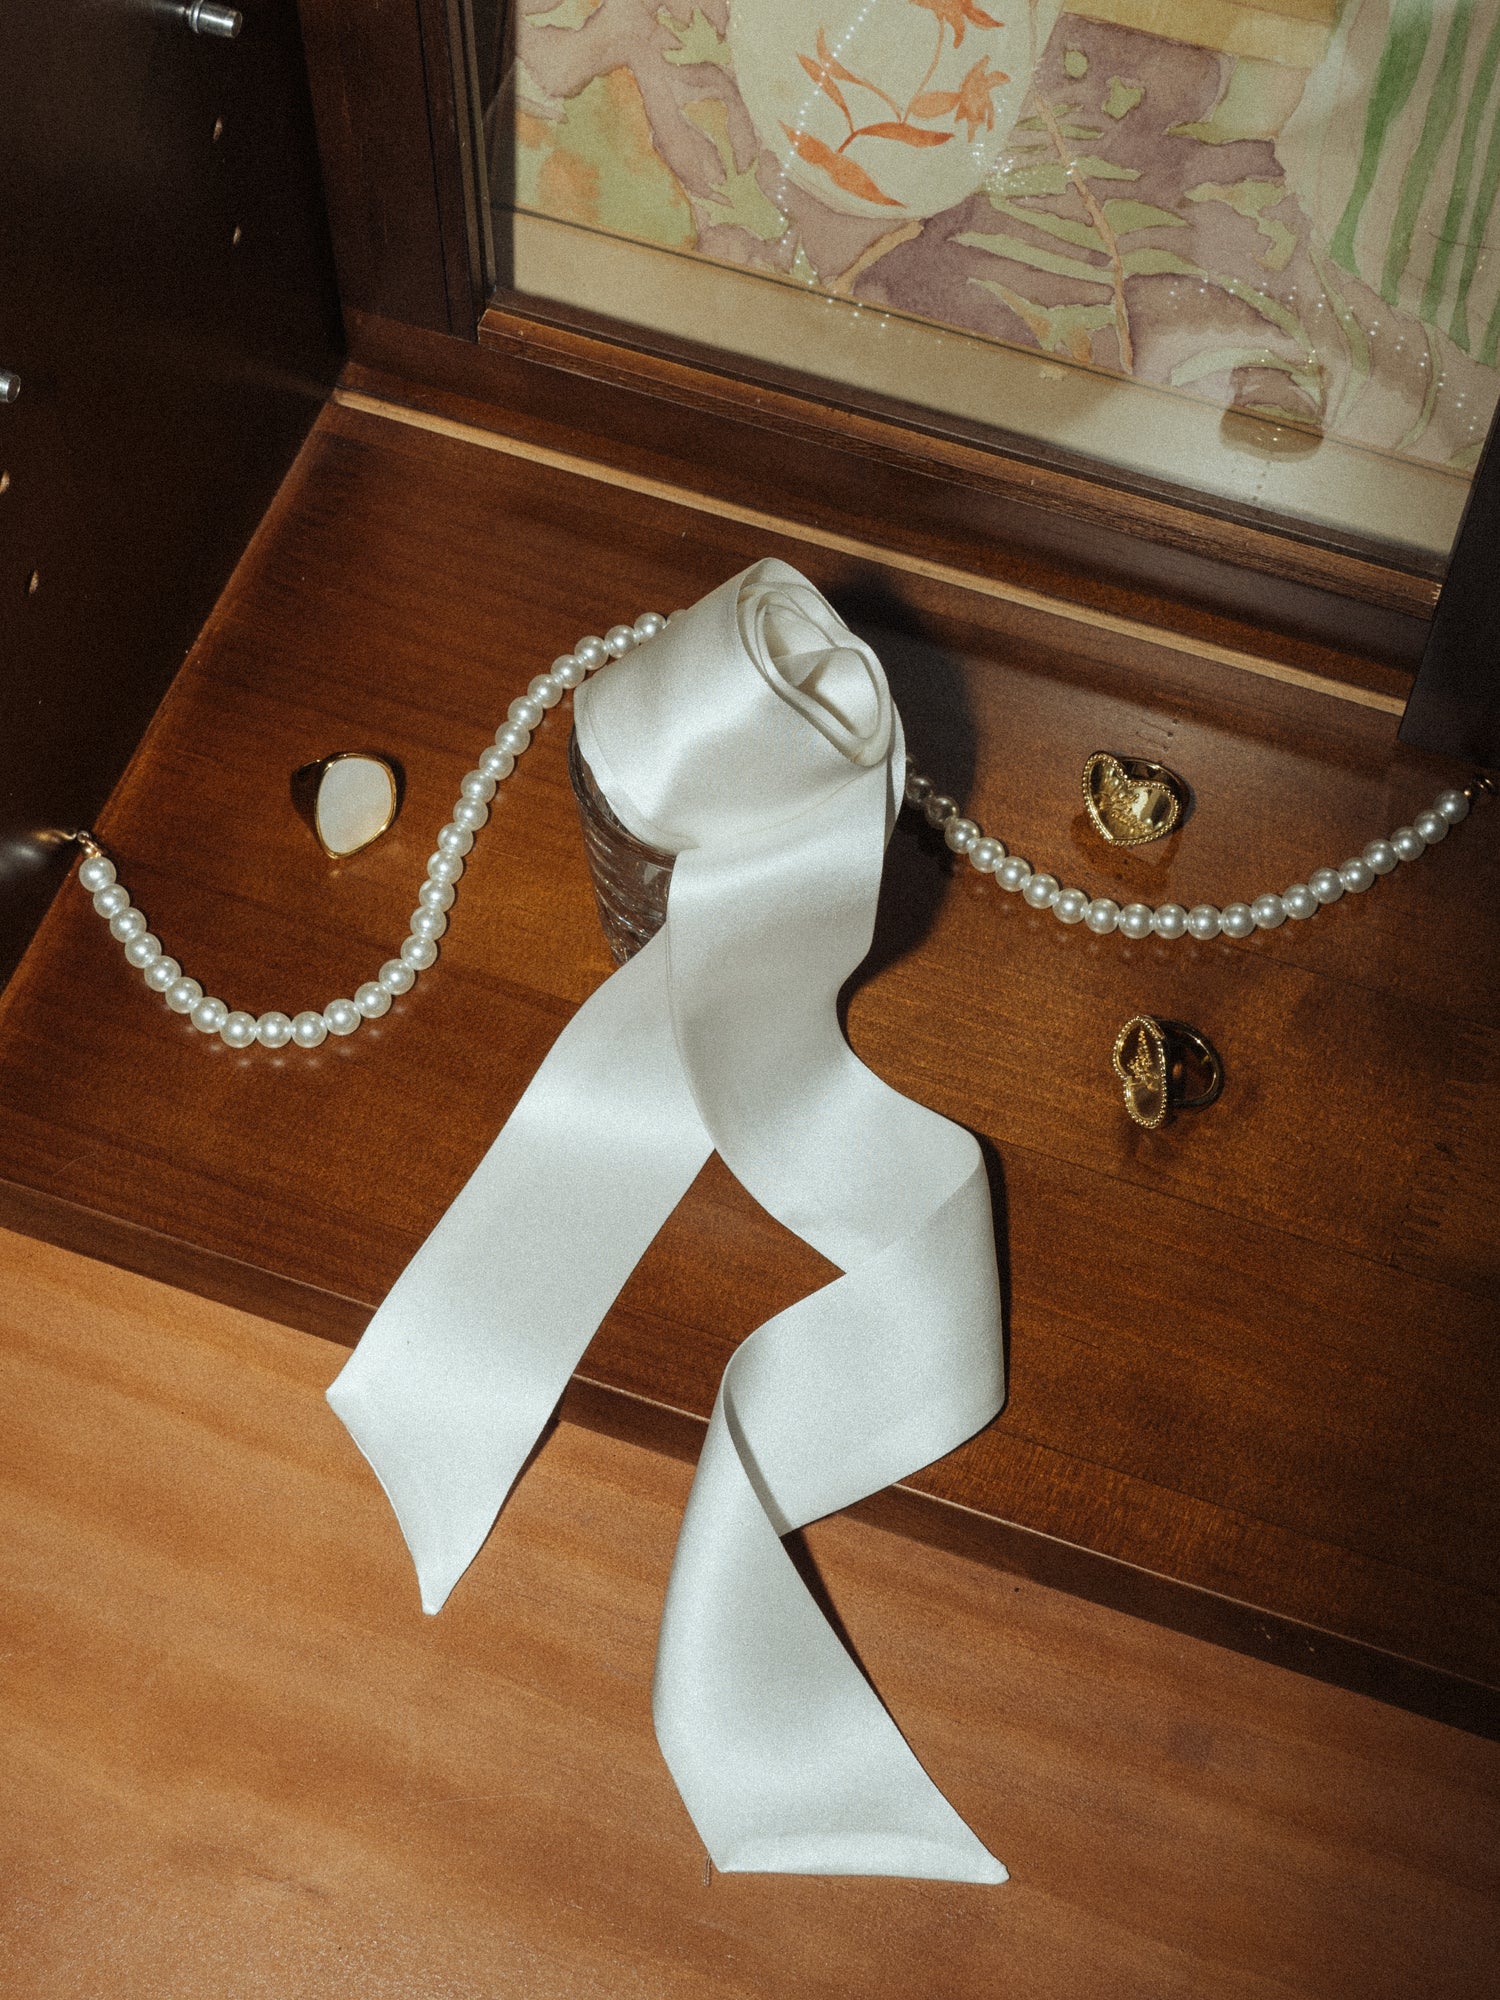 "La Collectionneuse" Silk Ribbon Scarf - White